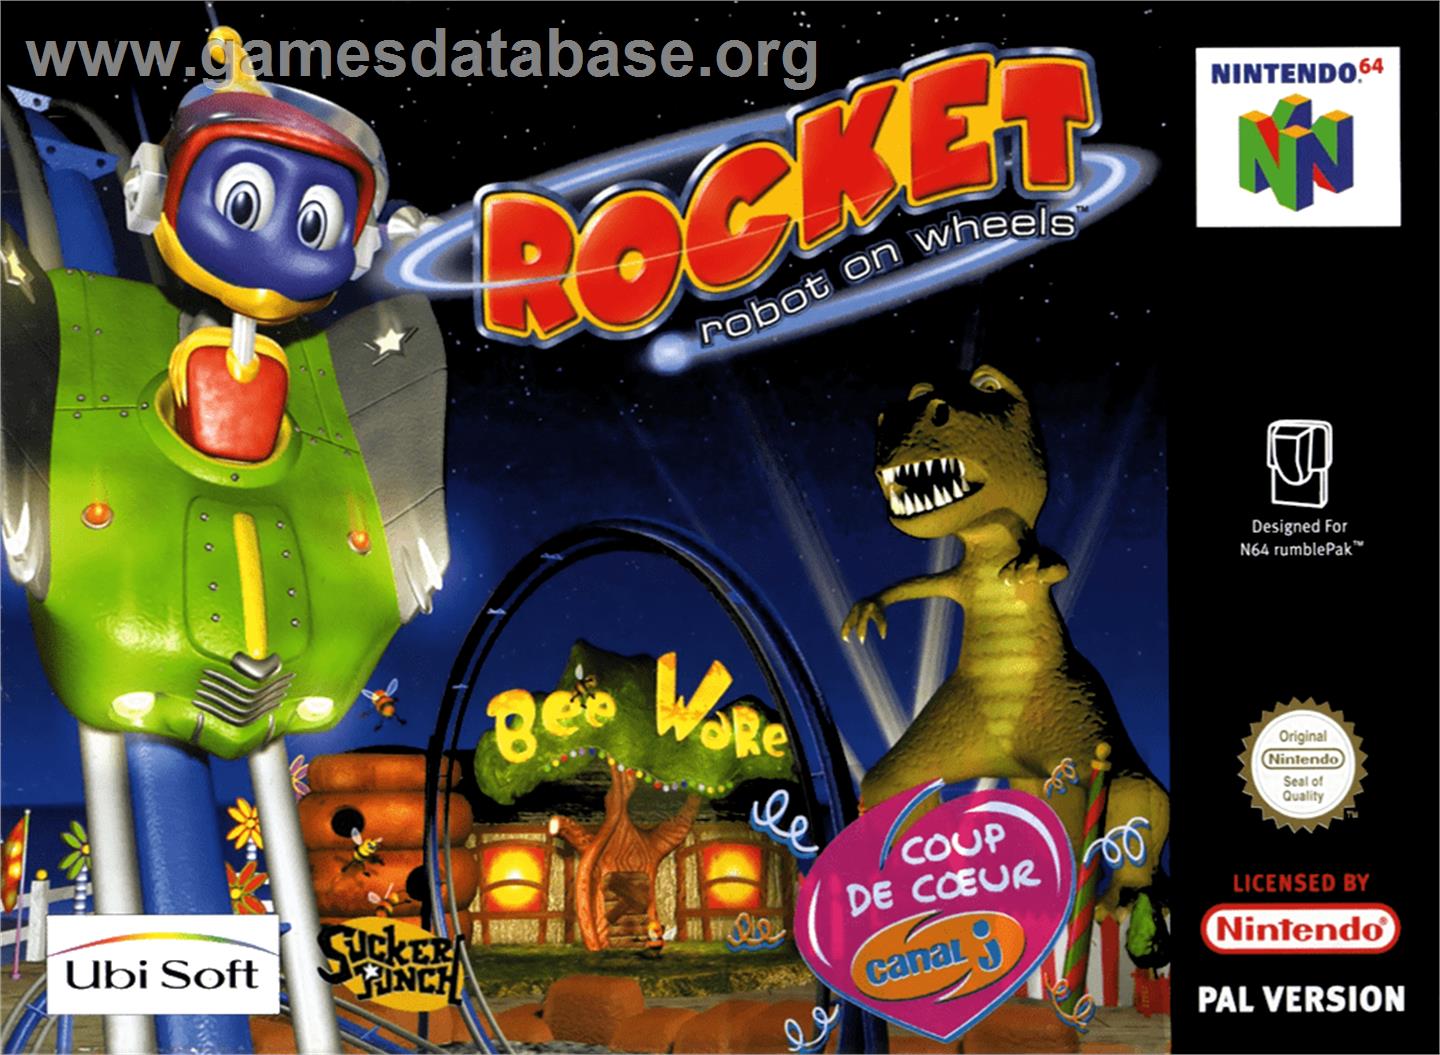 Rocket: Robot on Wheels - Nintendo N64 - Artwork - Box